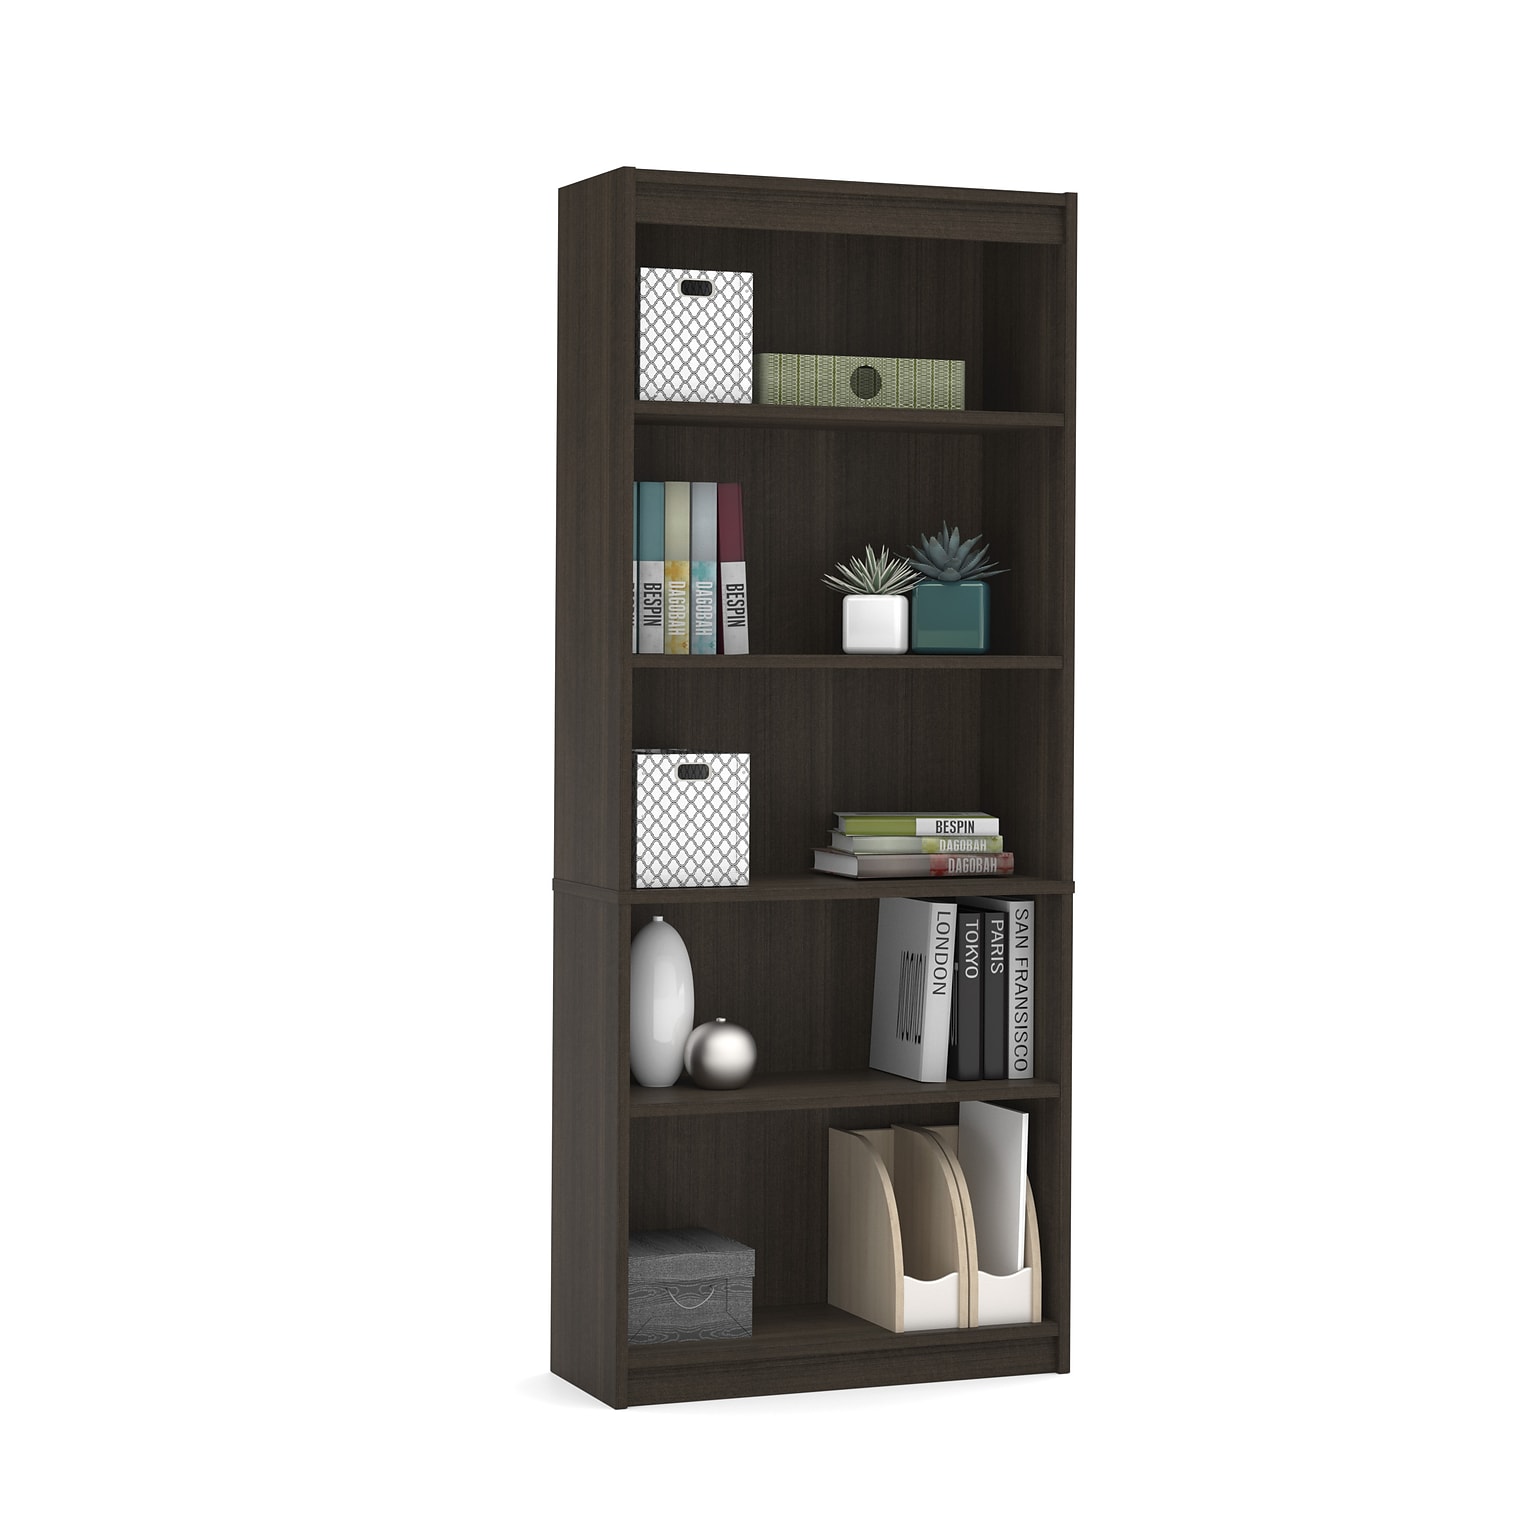 Bestar 72 5-Shelf Bookcase with Adjustable Shelves, Dark Chocolate (65715-000079)